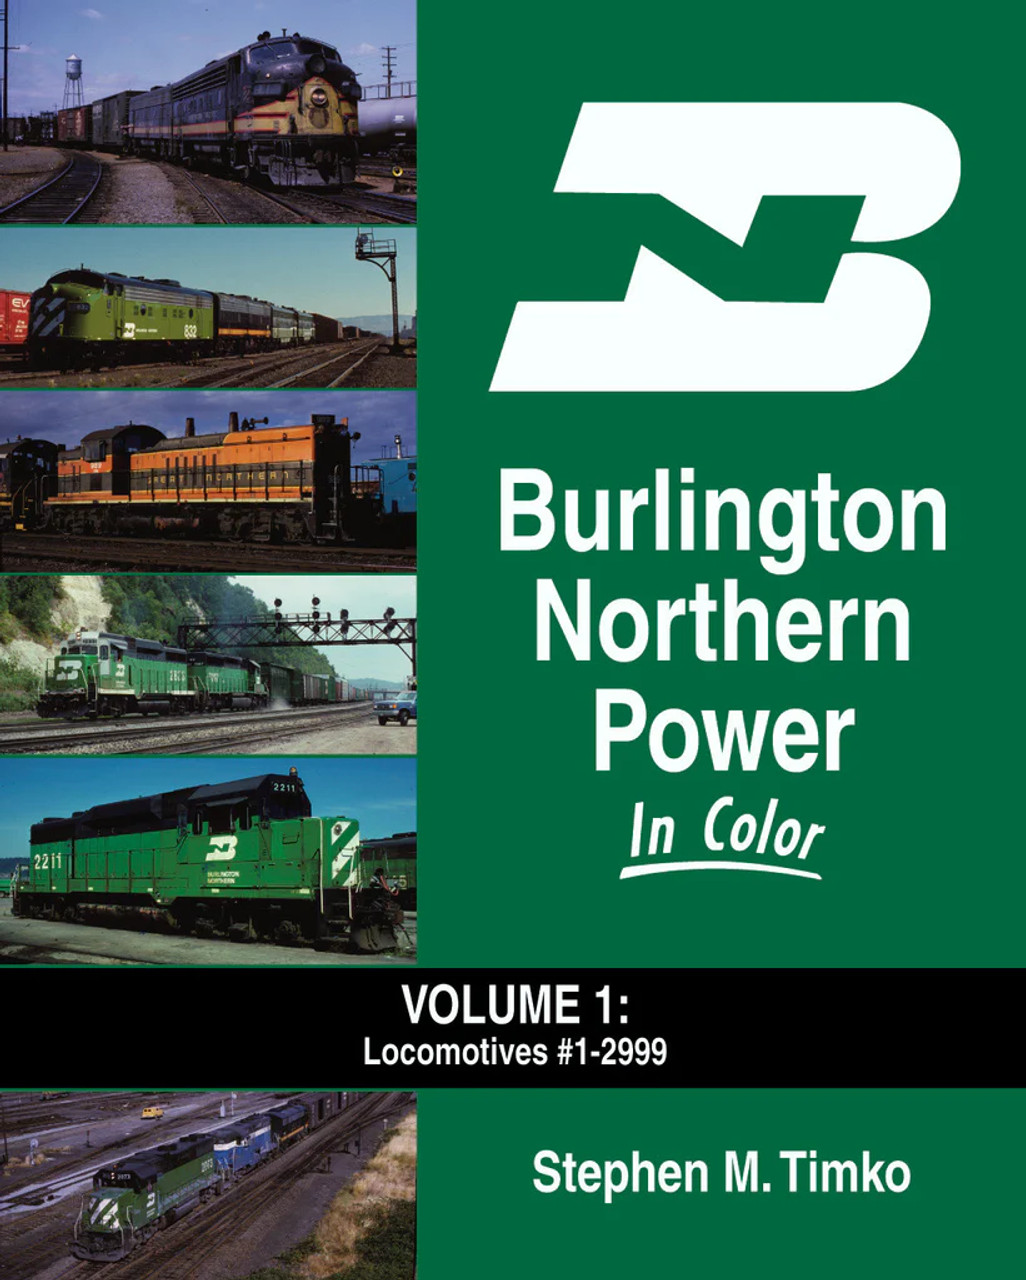 Morning Sun 1512 Burlington Northern Power In Color ﻿Volume 1: Locomotives #1 to 2999